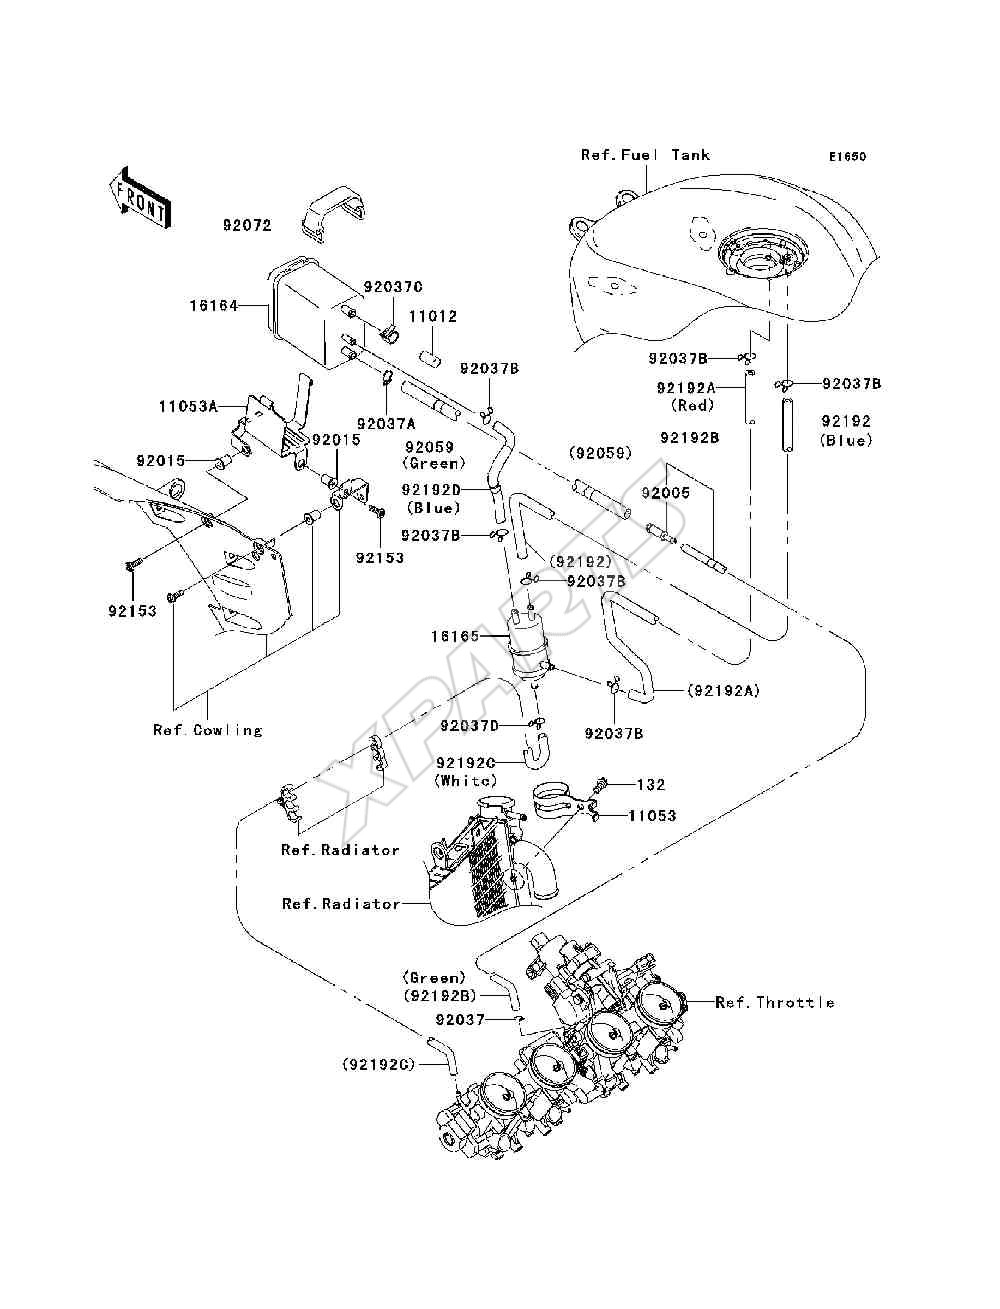 Bild für Kategorie Fuel Evaporative System(CA)